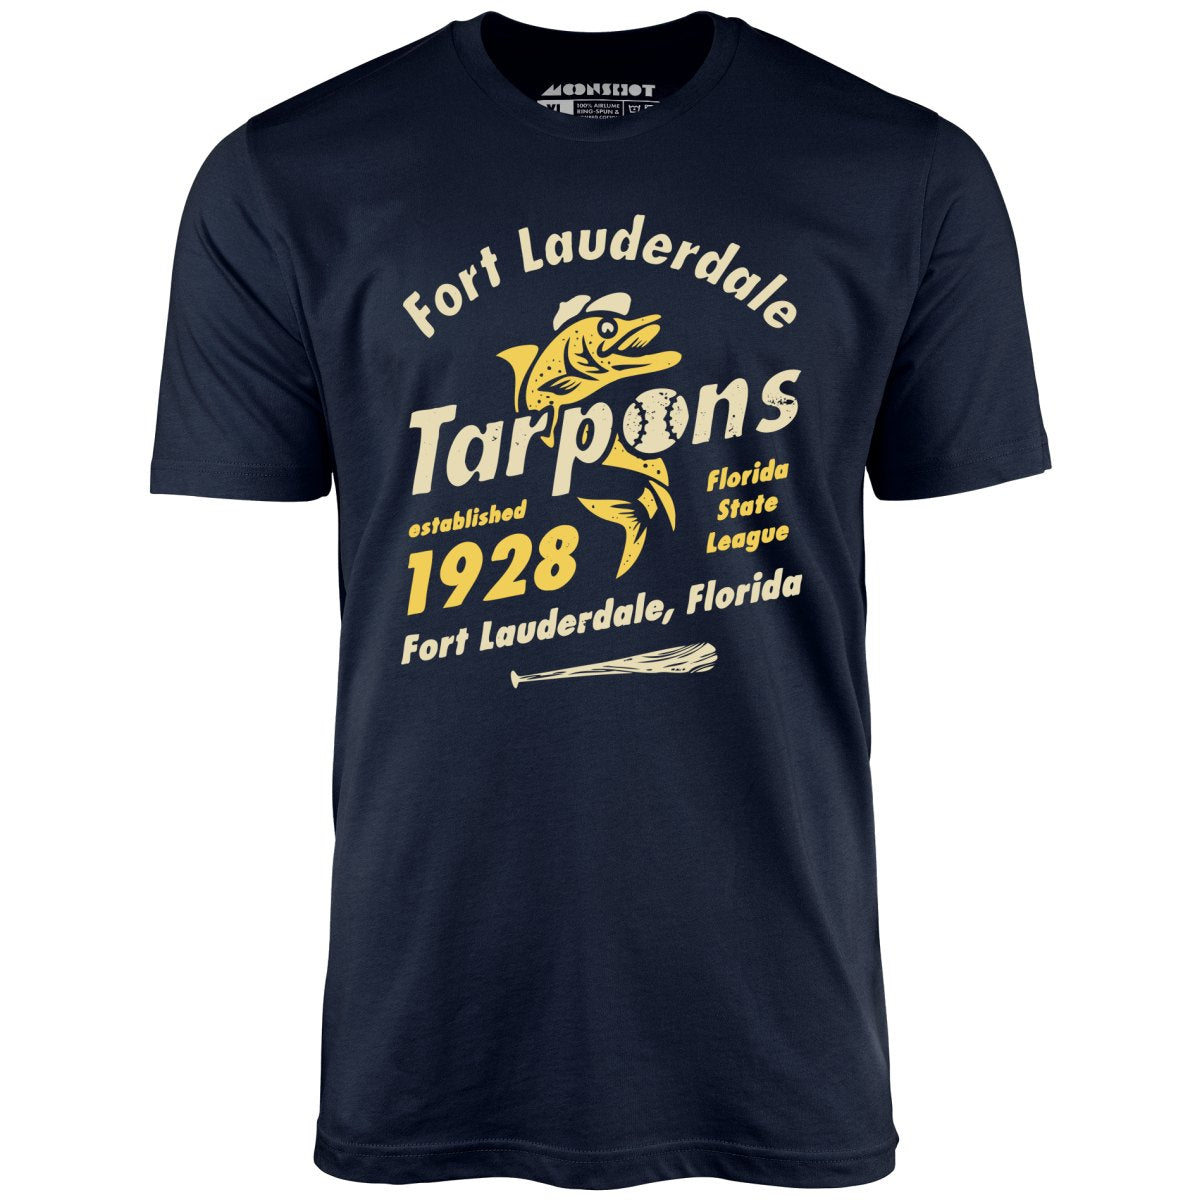 Fort Lauderdale Tarpons - Florida - Vintage Defunct Baseball Teams - Unisex T-Shirt